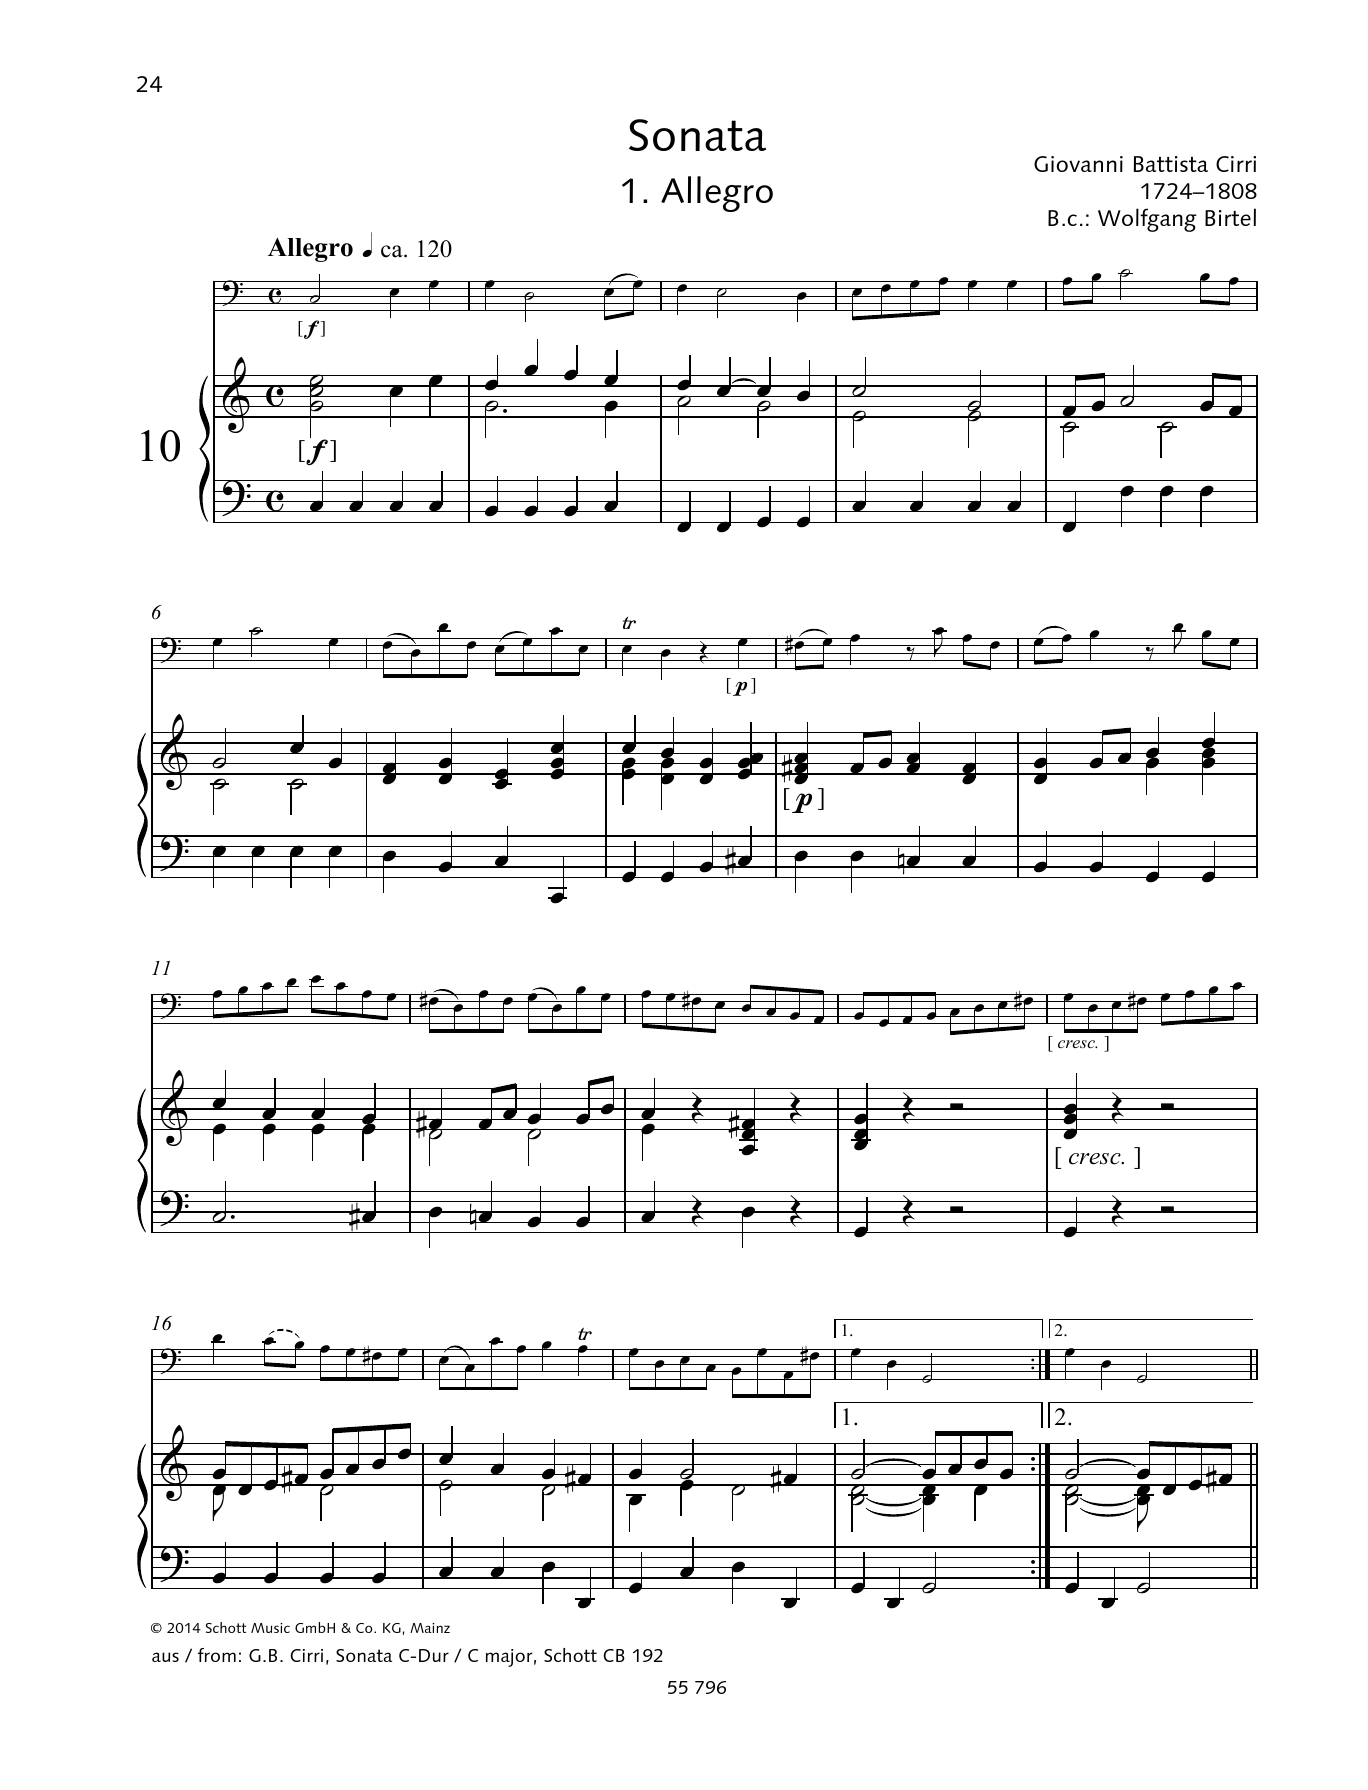 Giovanni Battista Cirri Allegro Sheet Music Notes & Chords for String Solo - Download or Print PDF